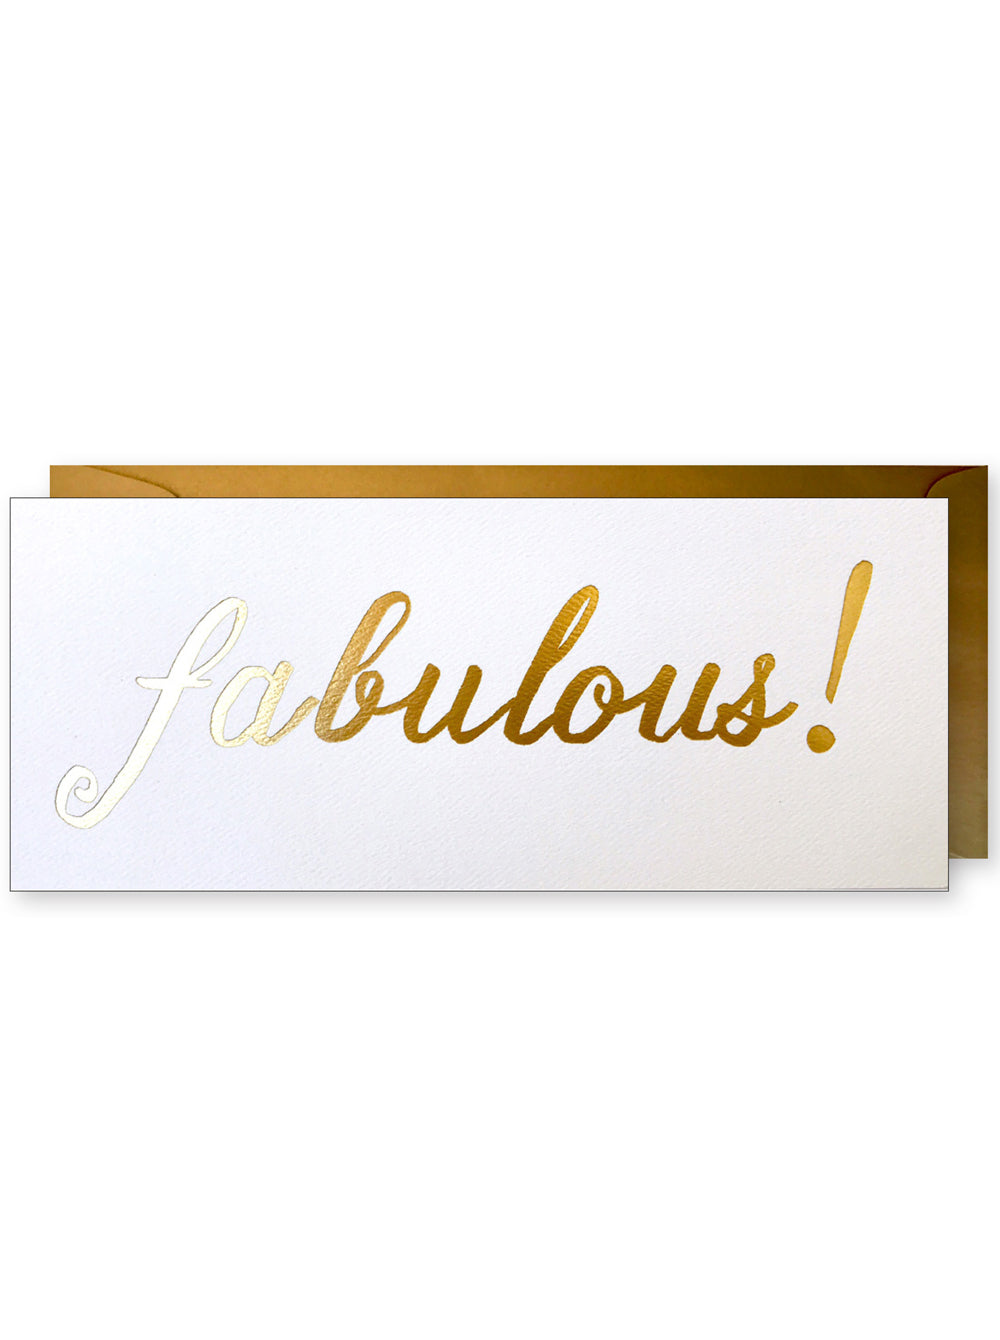 Fabulous! Card